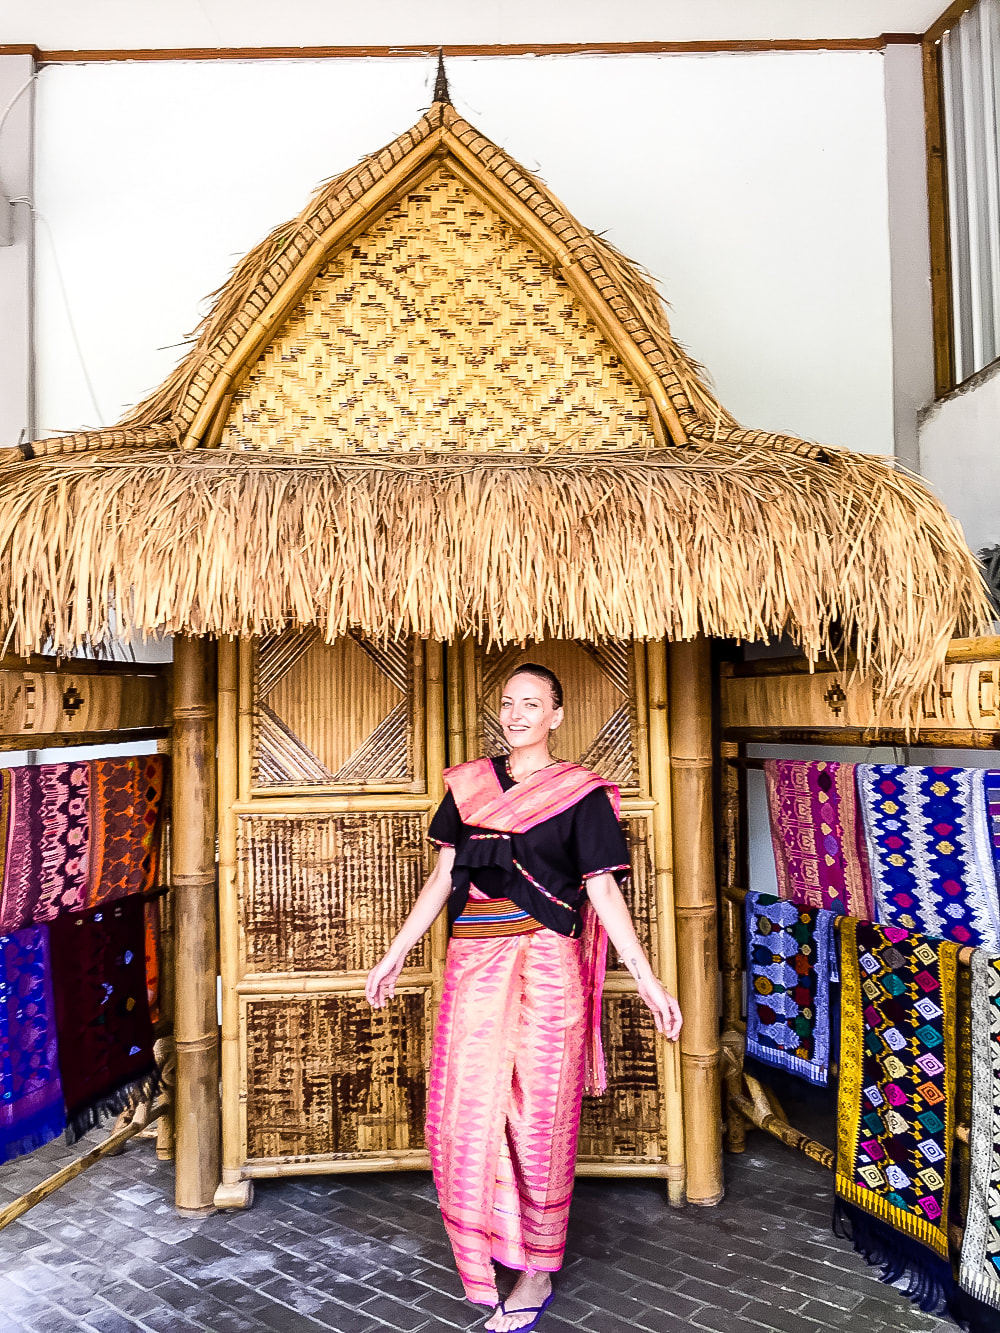 Lombok: Sukarara Weaving Village - tourist dressed in traditional Sasak clothing at the Patuh Art Shop.